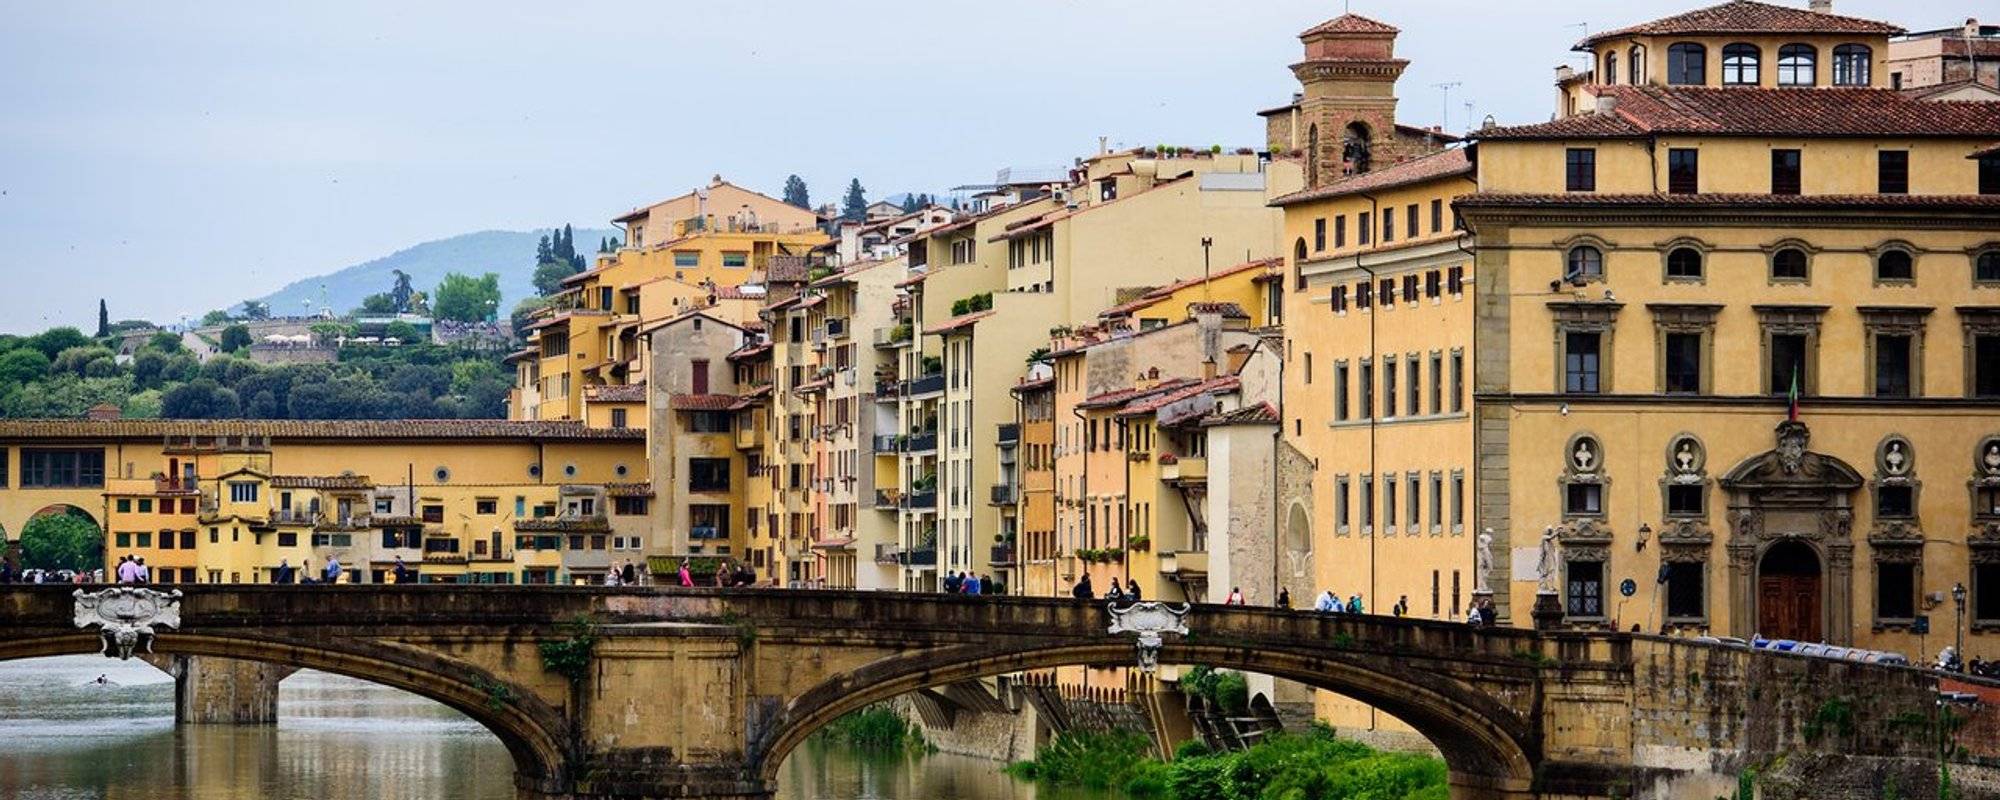 Art Talk: Walking tour of Florence, Italy